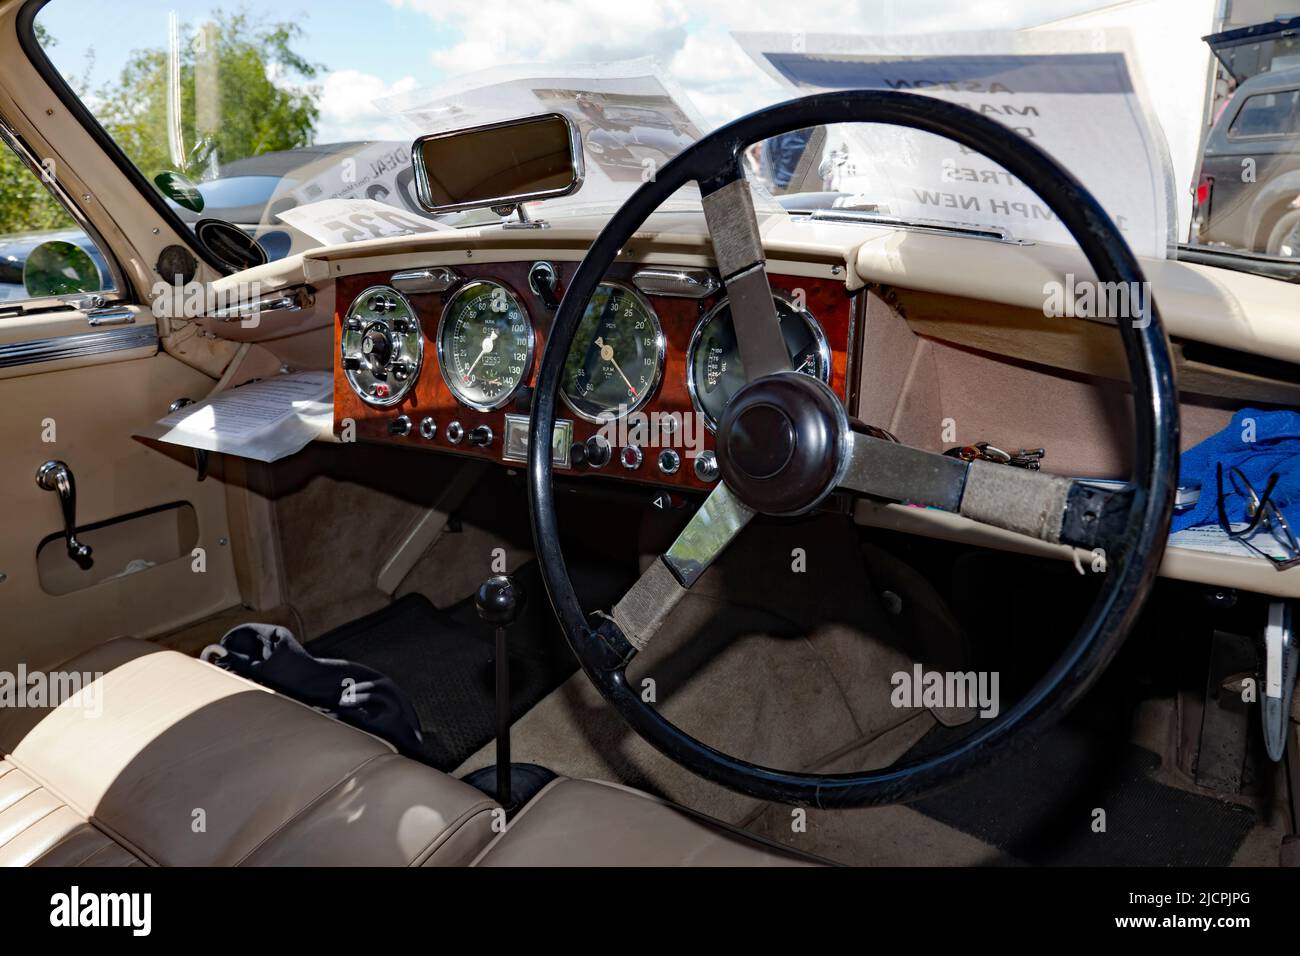 Aston martin lagonda at car show hi-res stock photography and